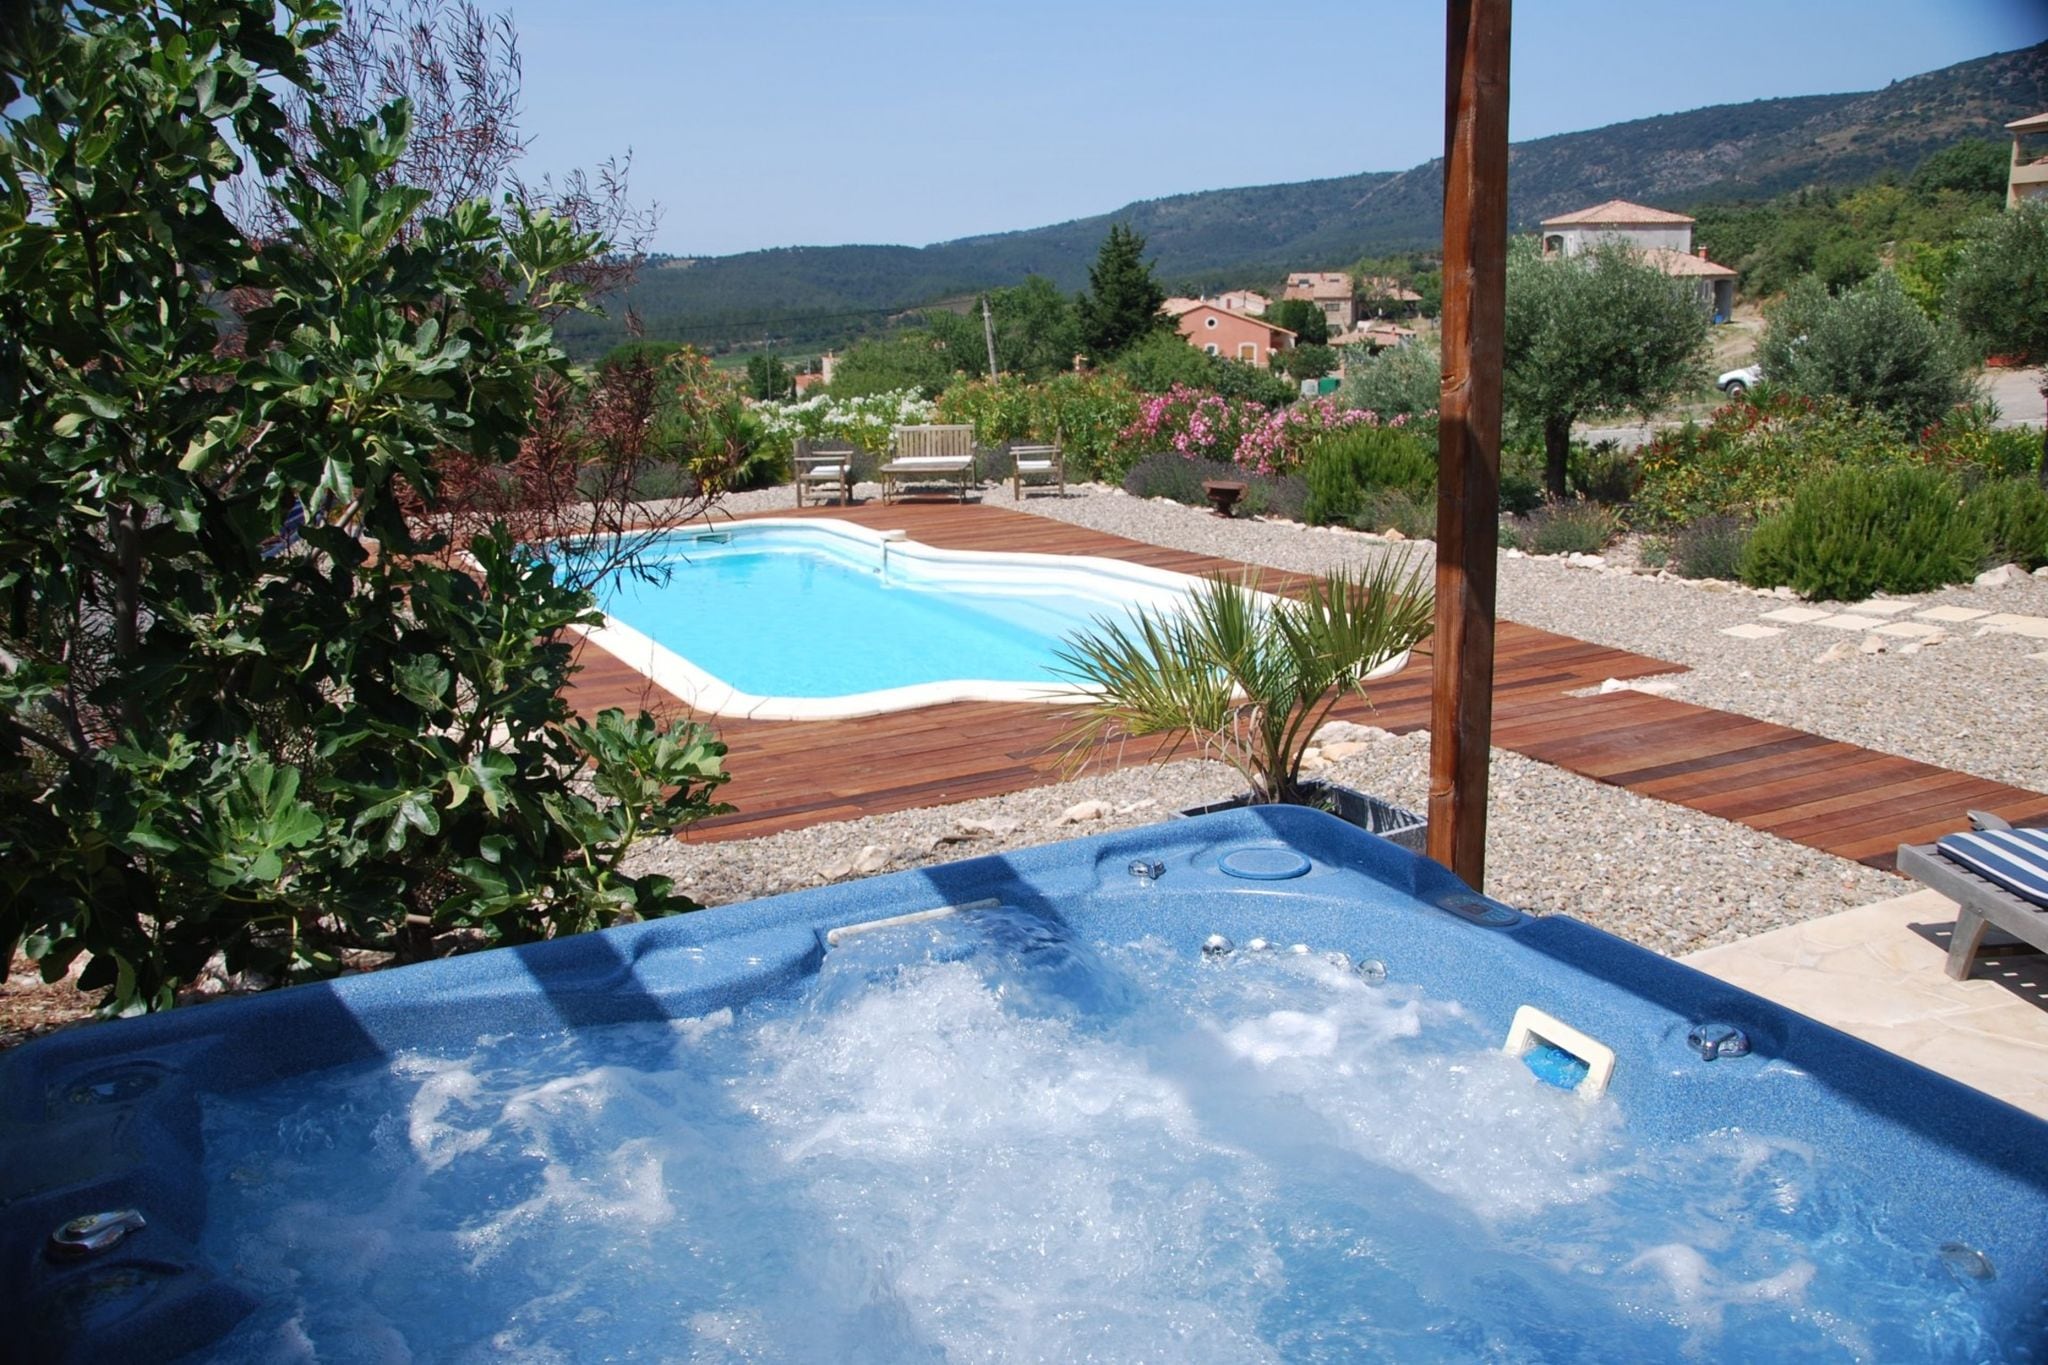 Spacious villa with private swimming pool and bubble bath